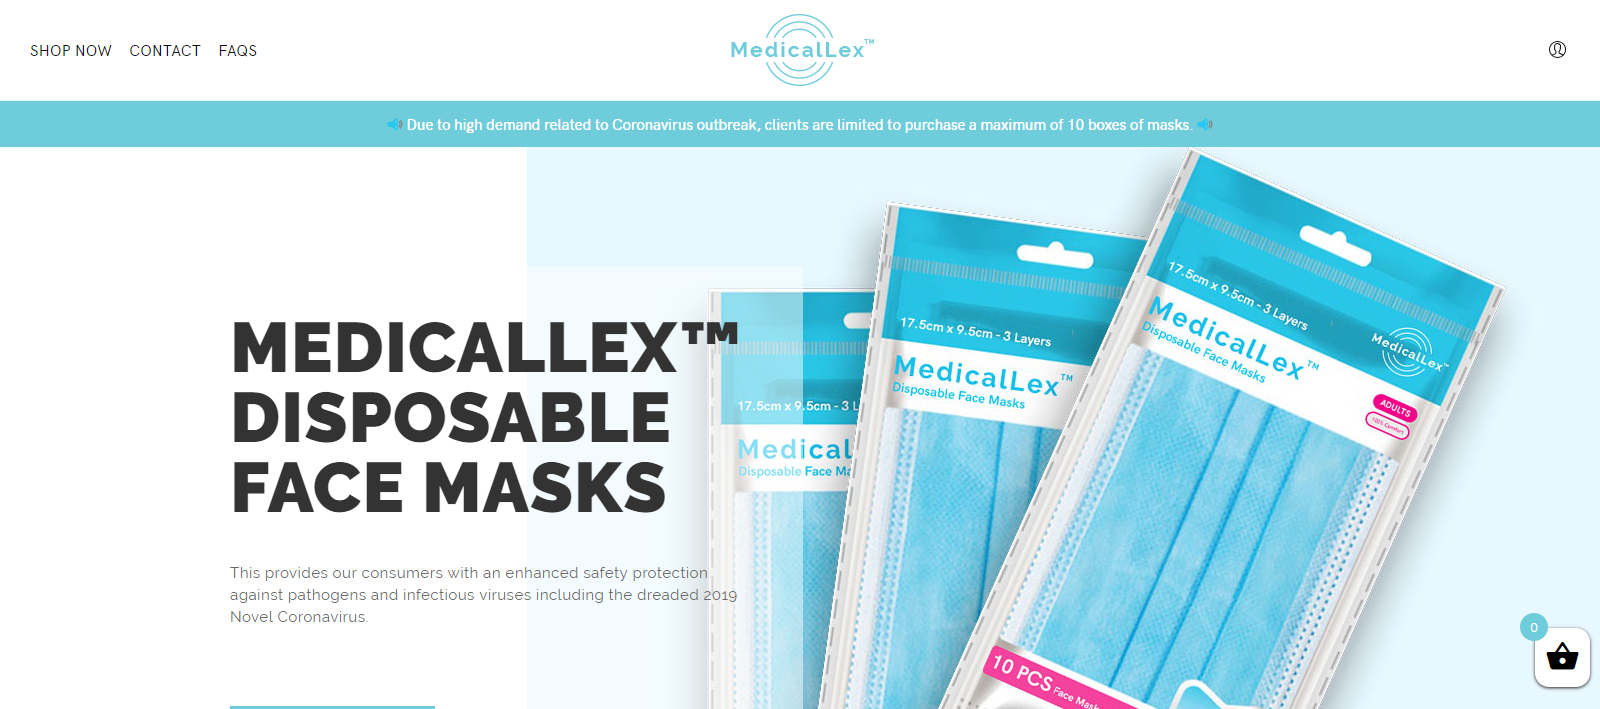 medicallex homepage image